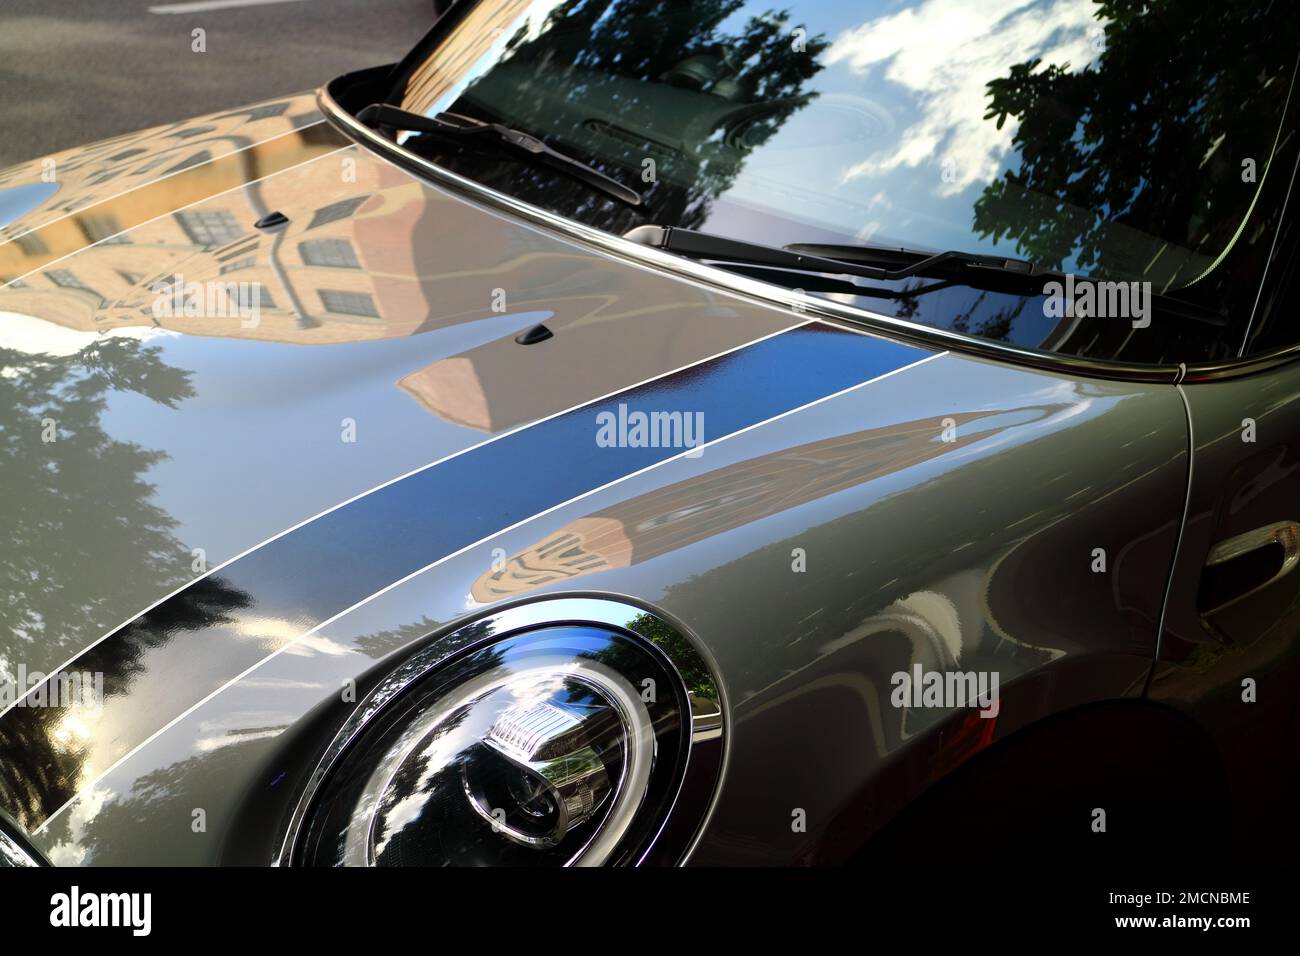 Shiny building reflection on Mini Cooper car bonnet Stock Photo